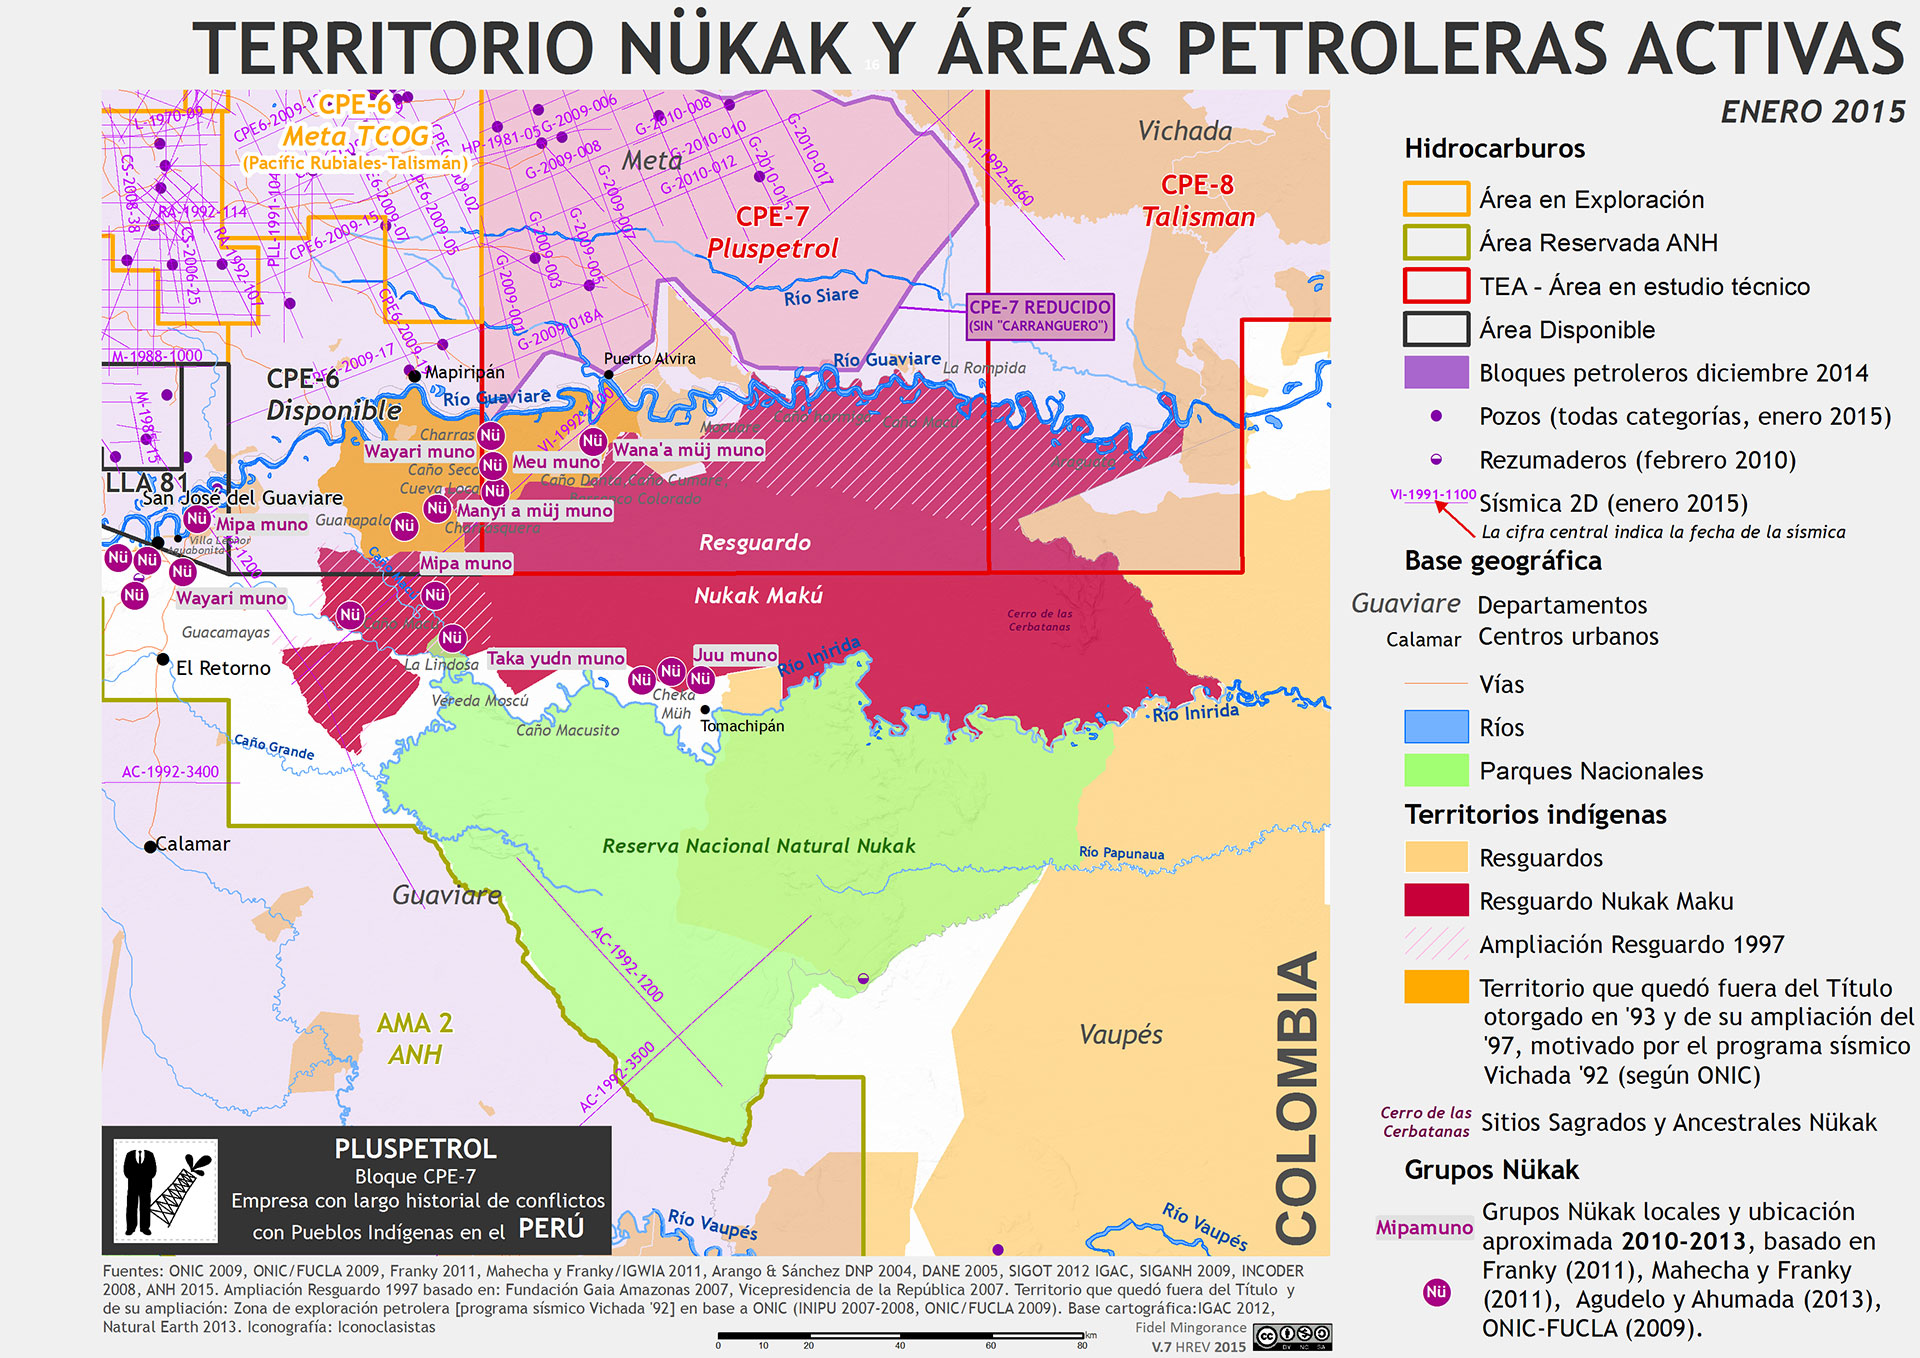 Territorio Nukak y amenaza petrolera (2015)